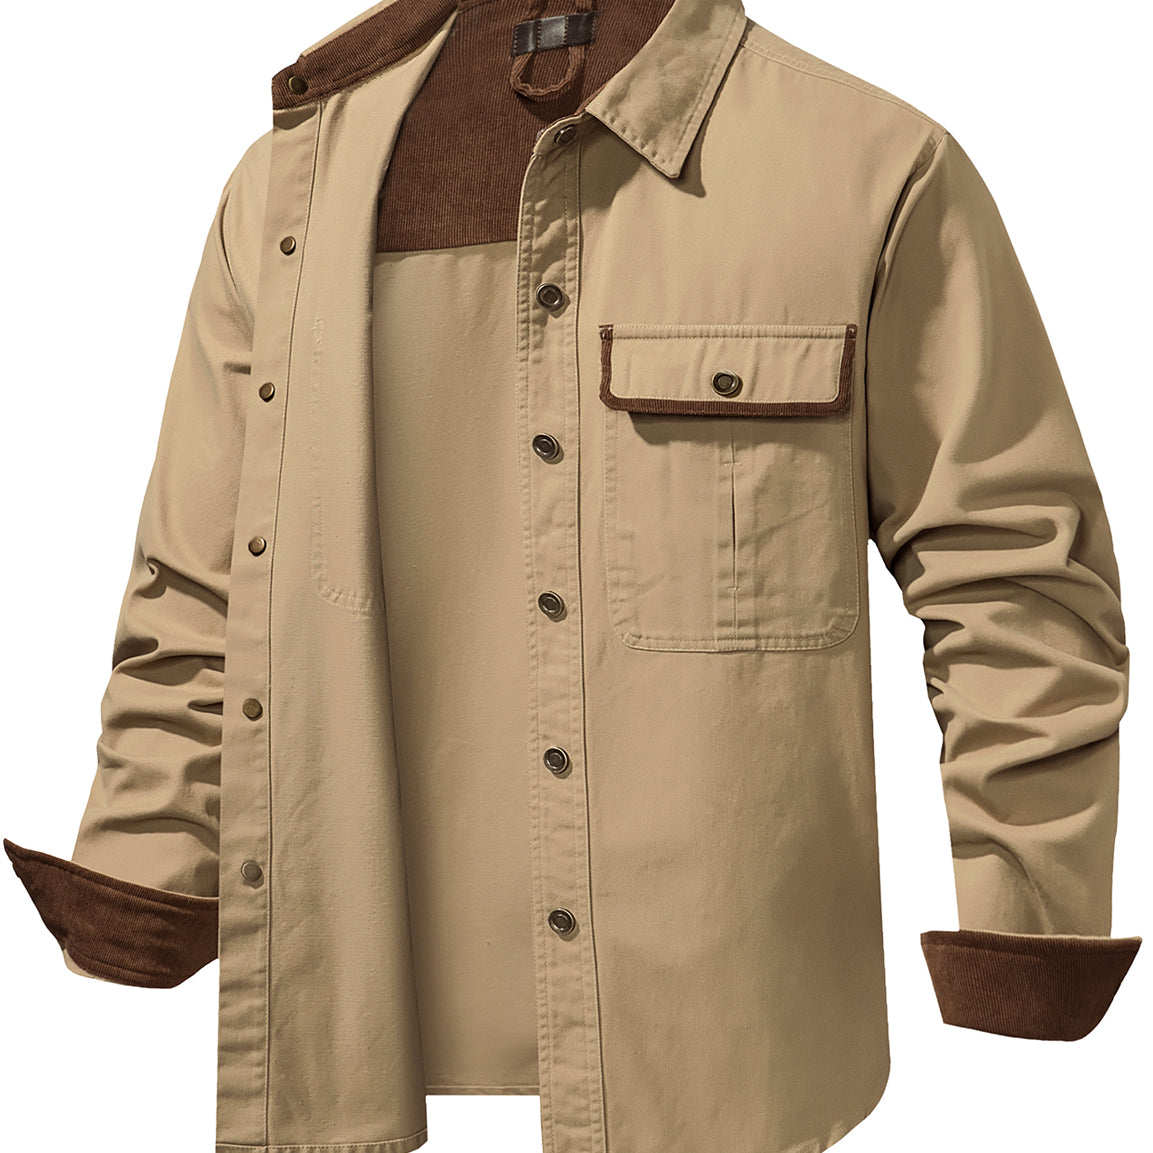 Men's Casual Cotton Pocket Button Up Fall Outdoor Hiking Long Sleeve Shirt